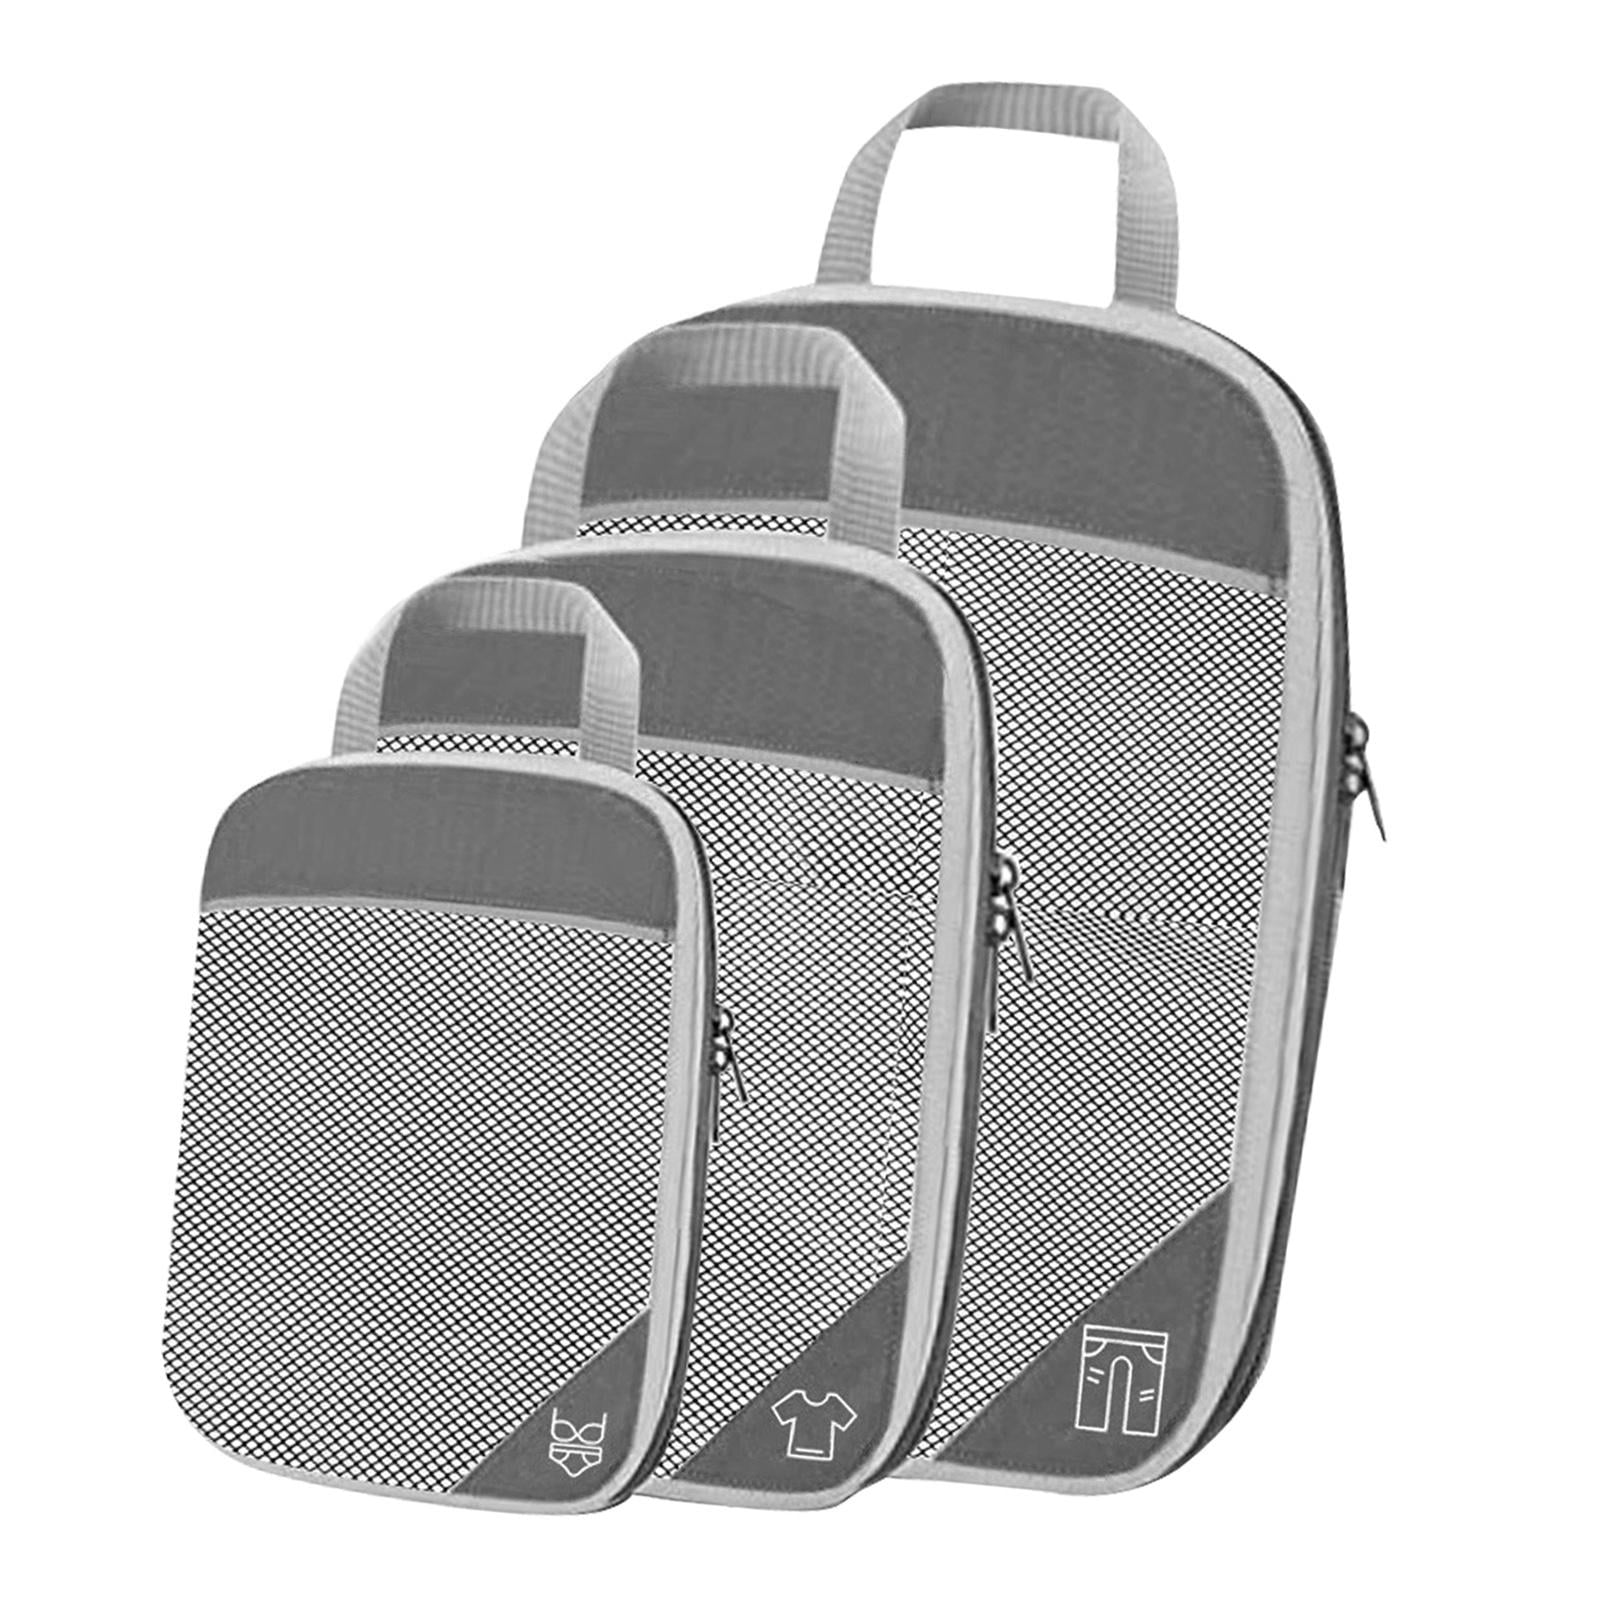 1set Travel Compression Storage Bags, 3pcs Clear Envelope Mesh